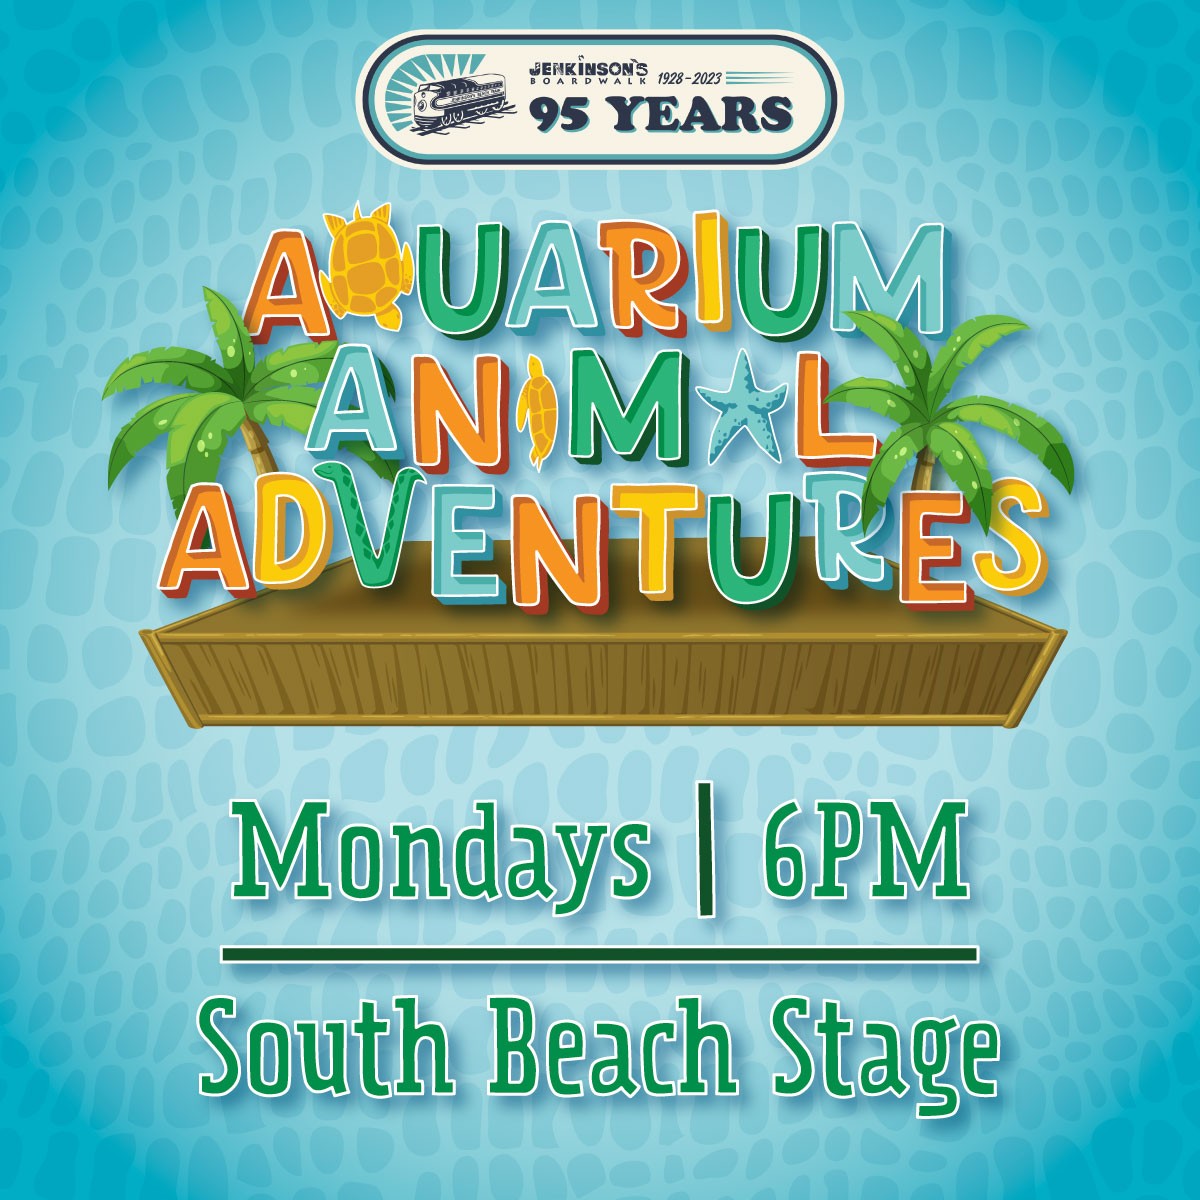 aquarium animal adventures mondays a6 pm on the south beach stage